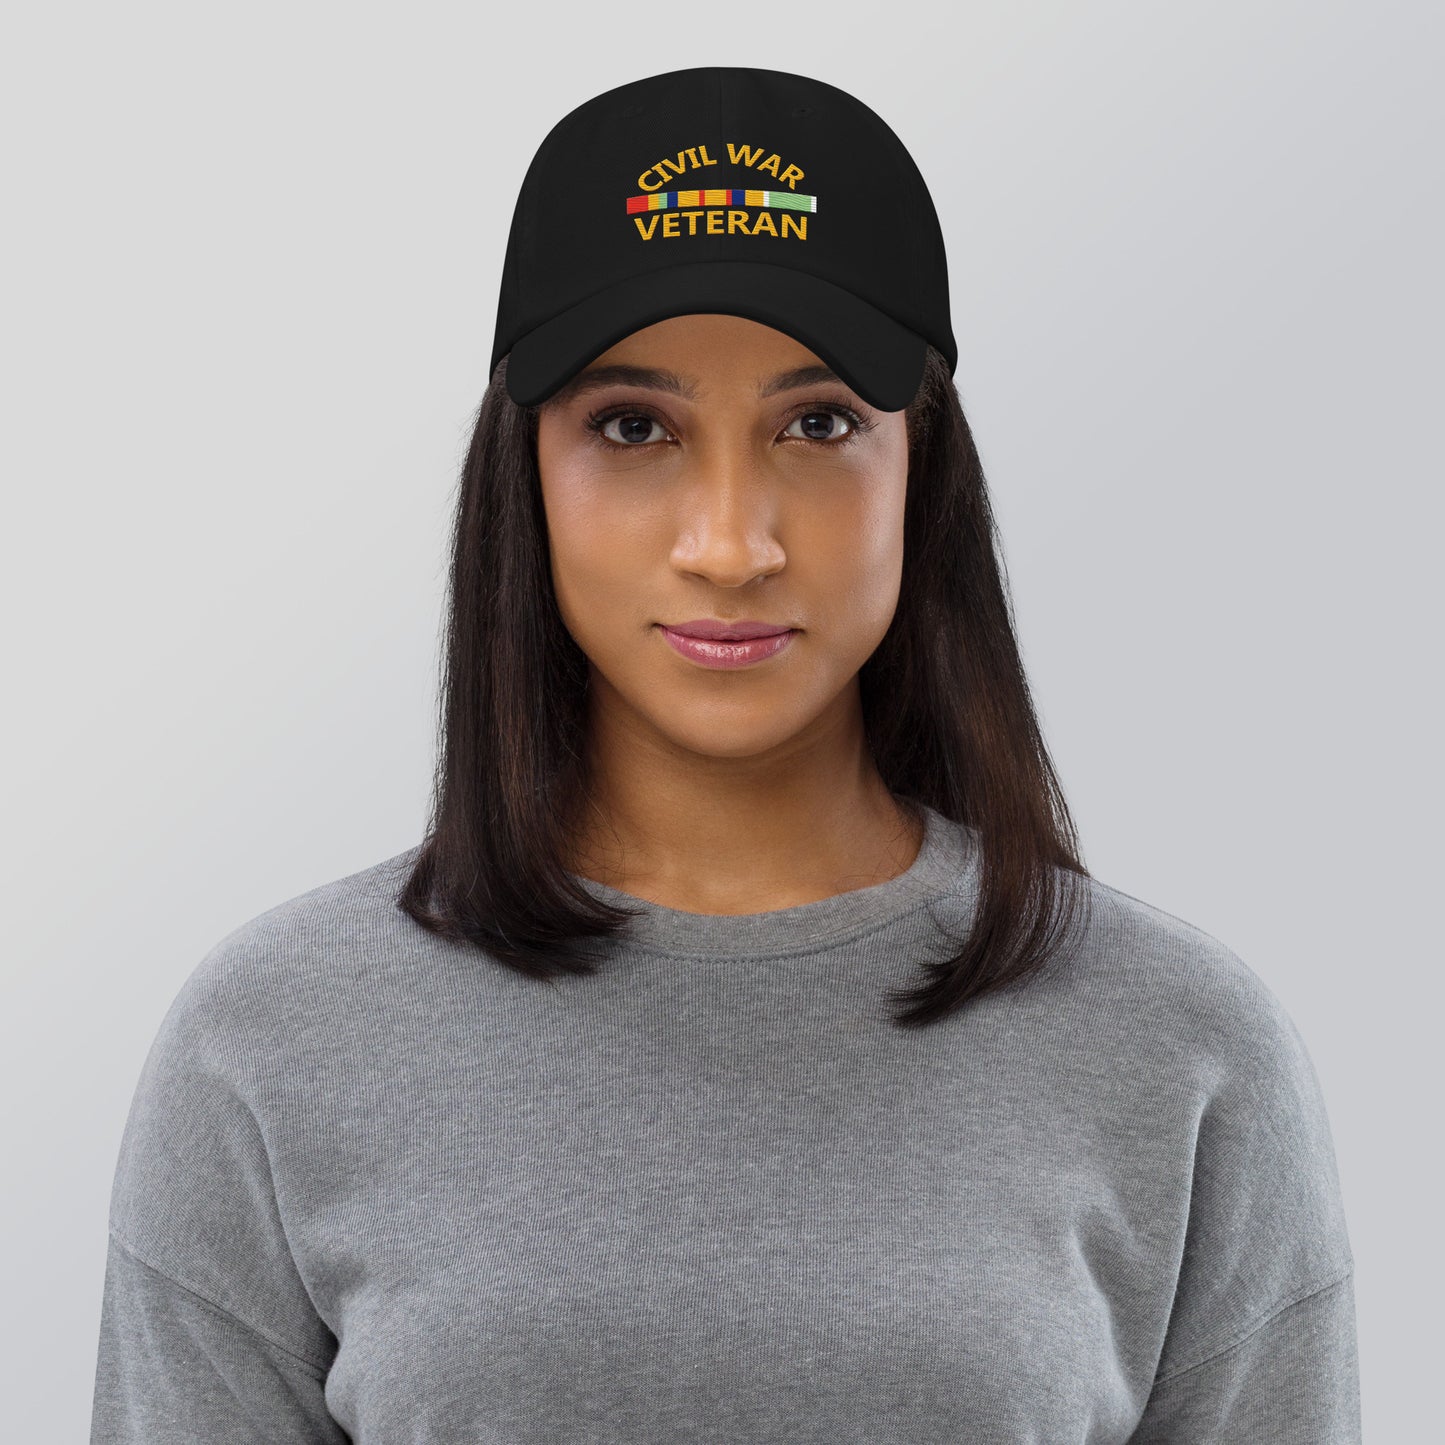 Civil War Black Veteran Joke Hat